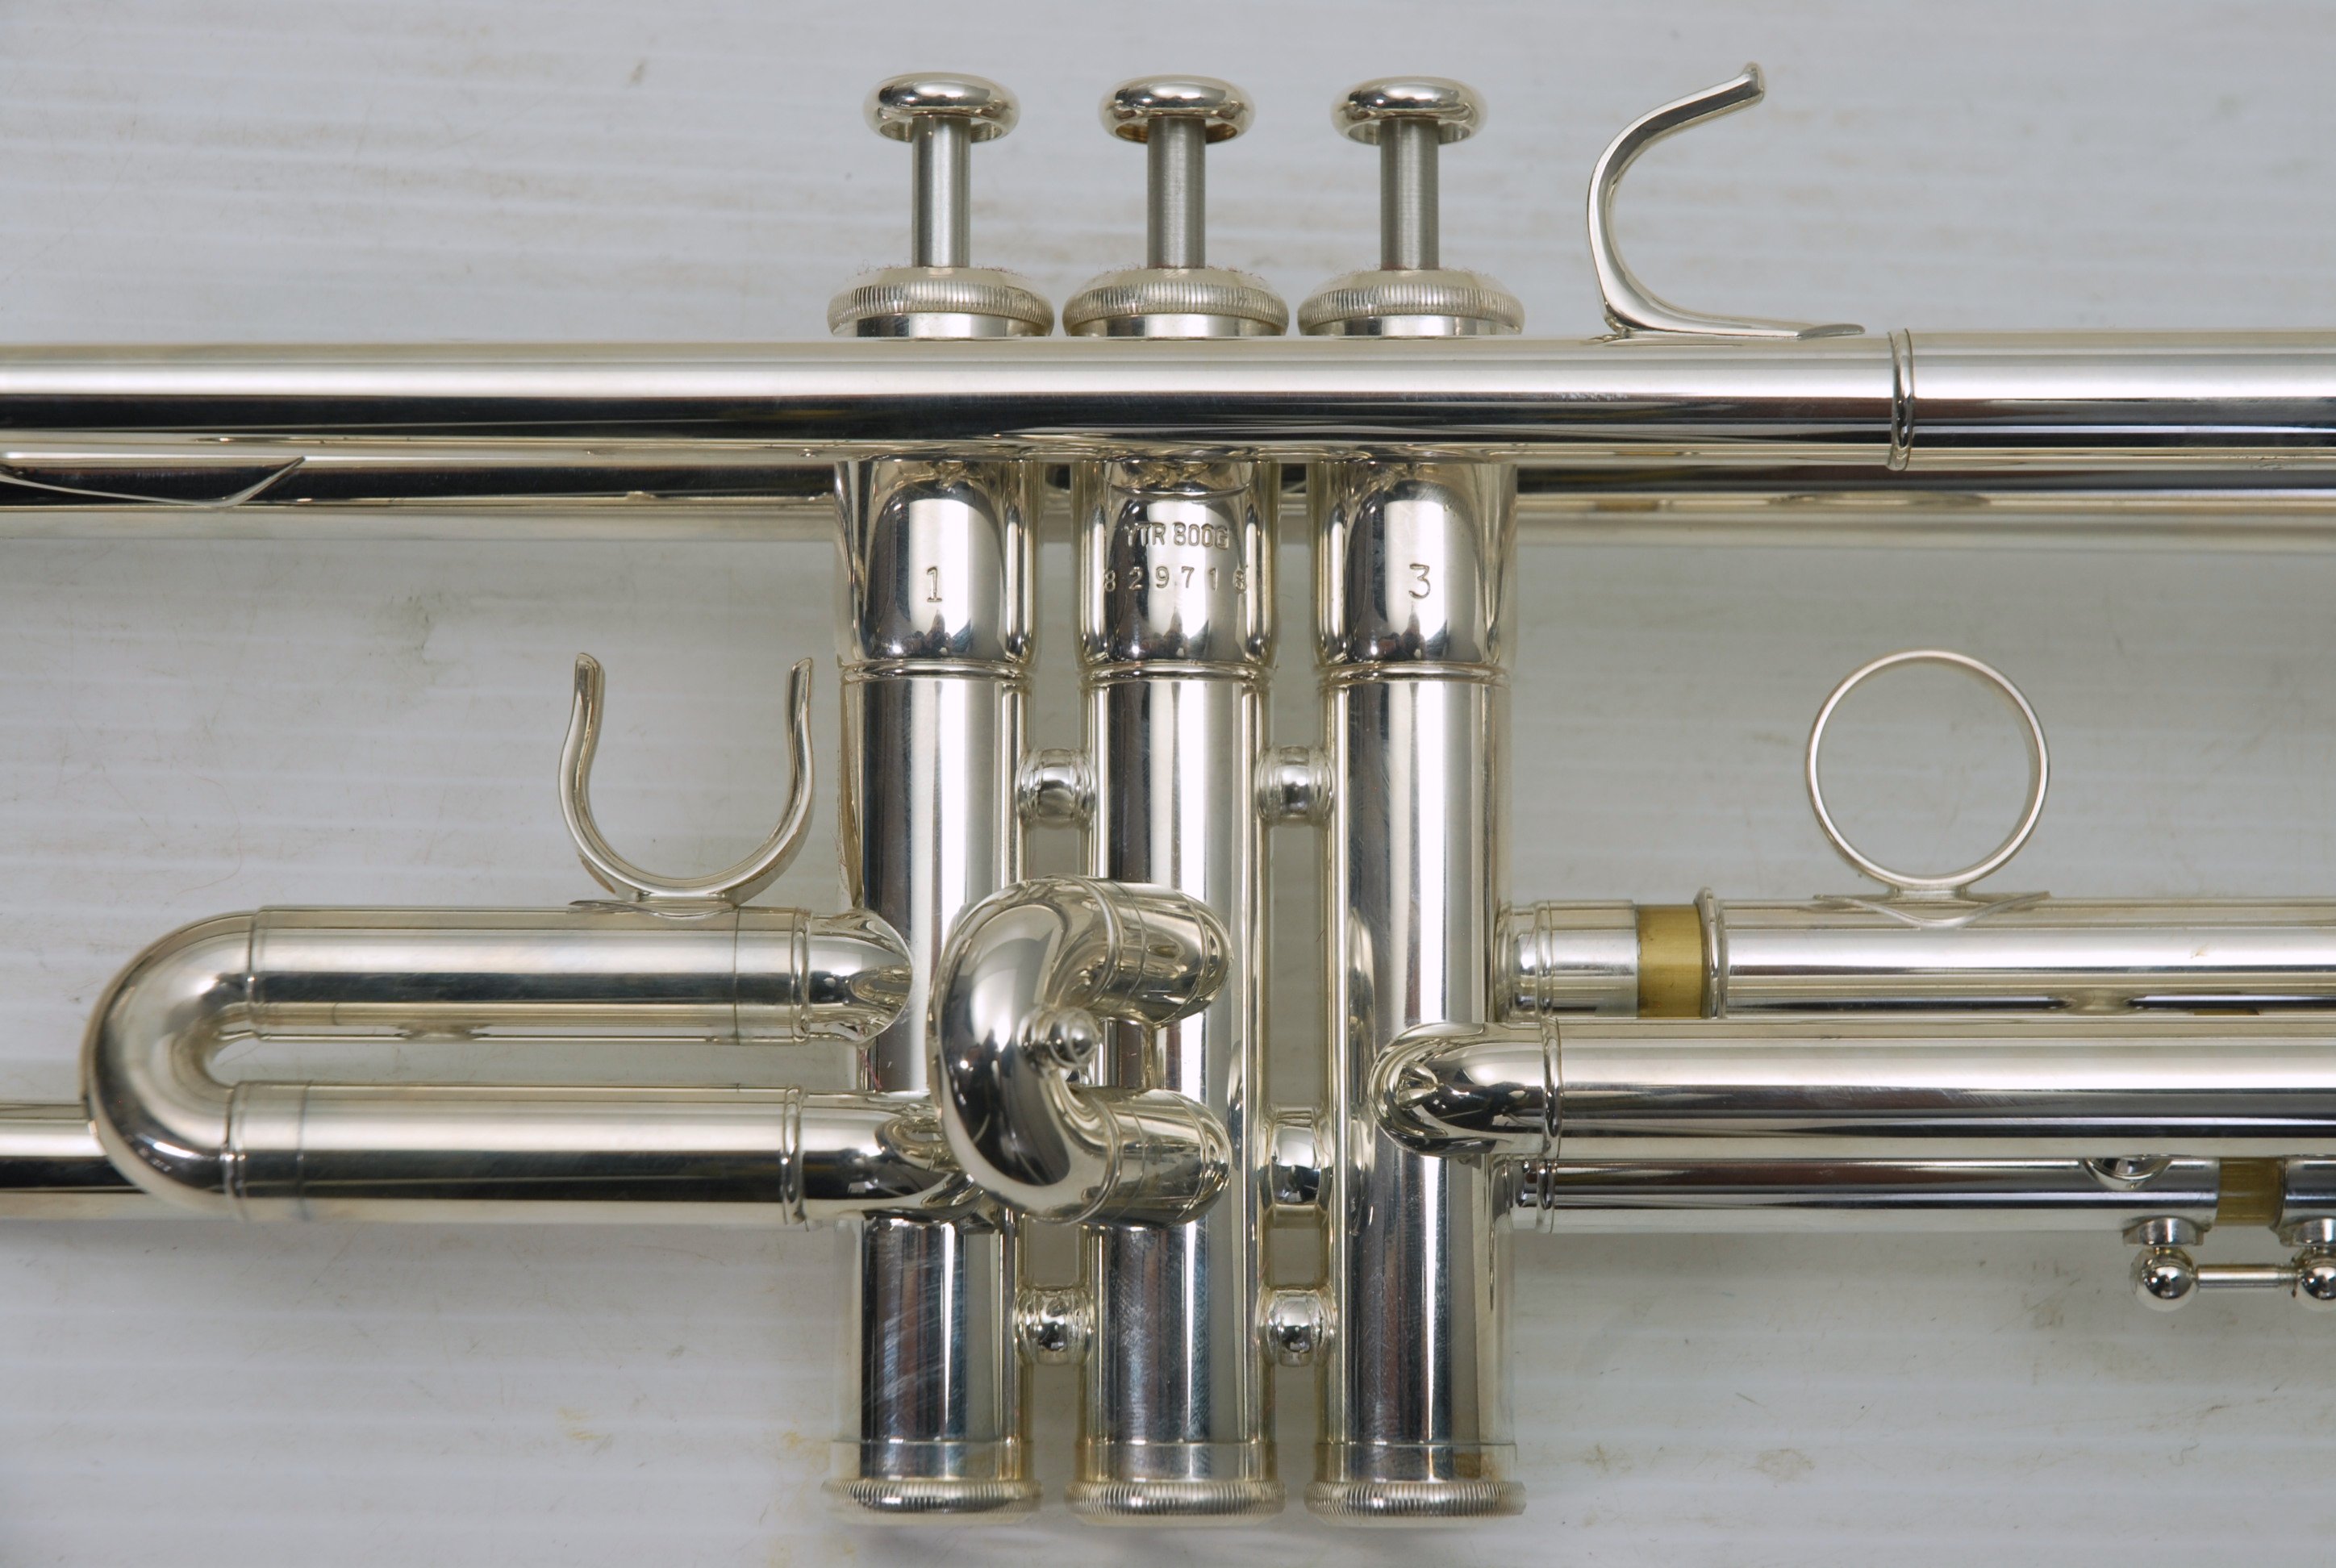 YTR-800G Xeno Trumpet